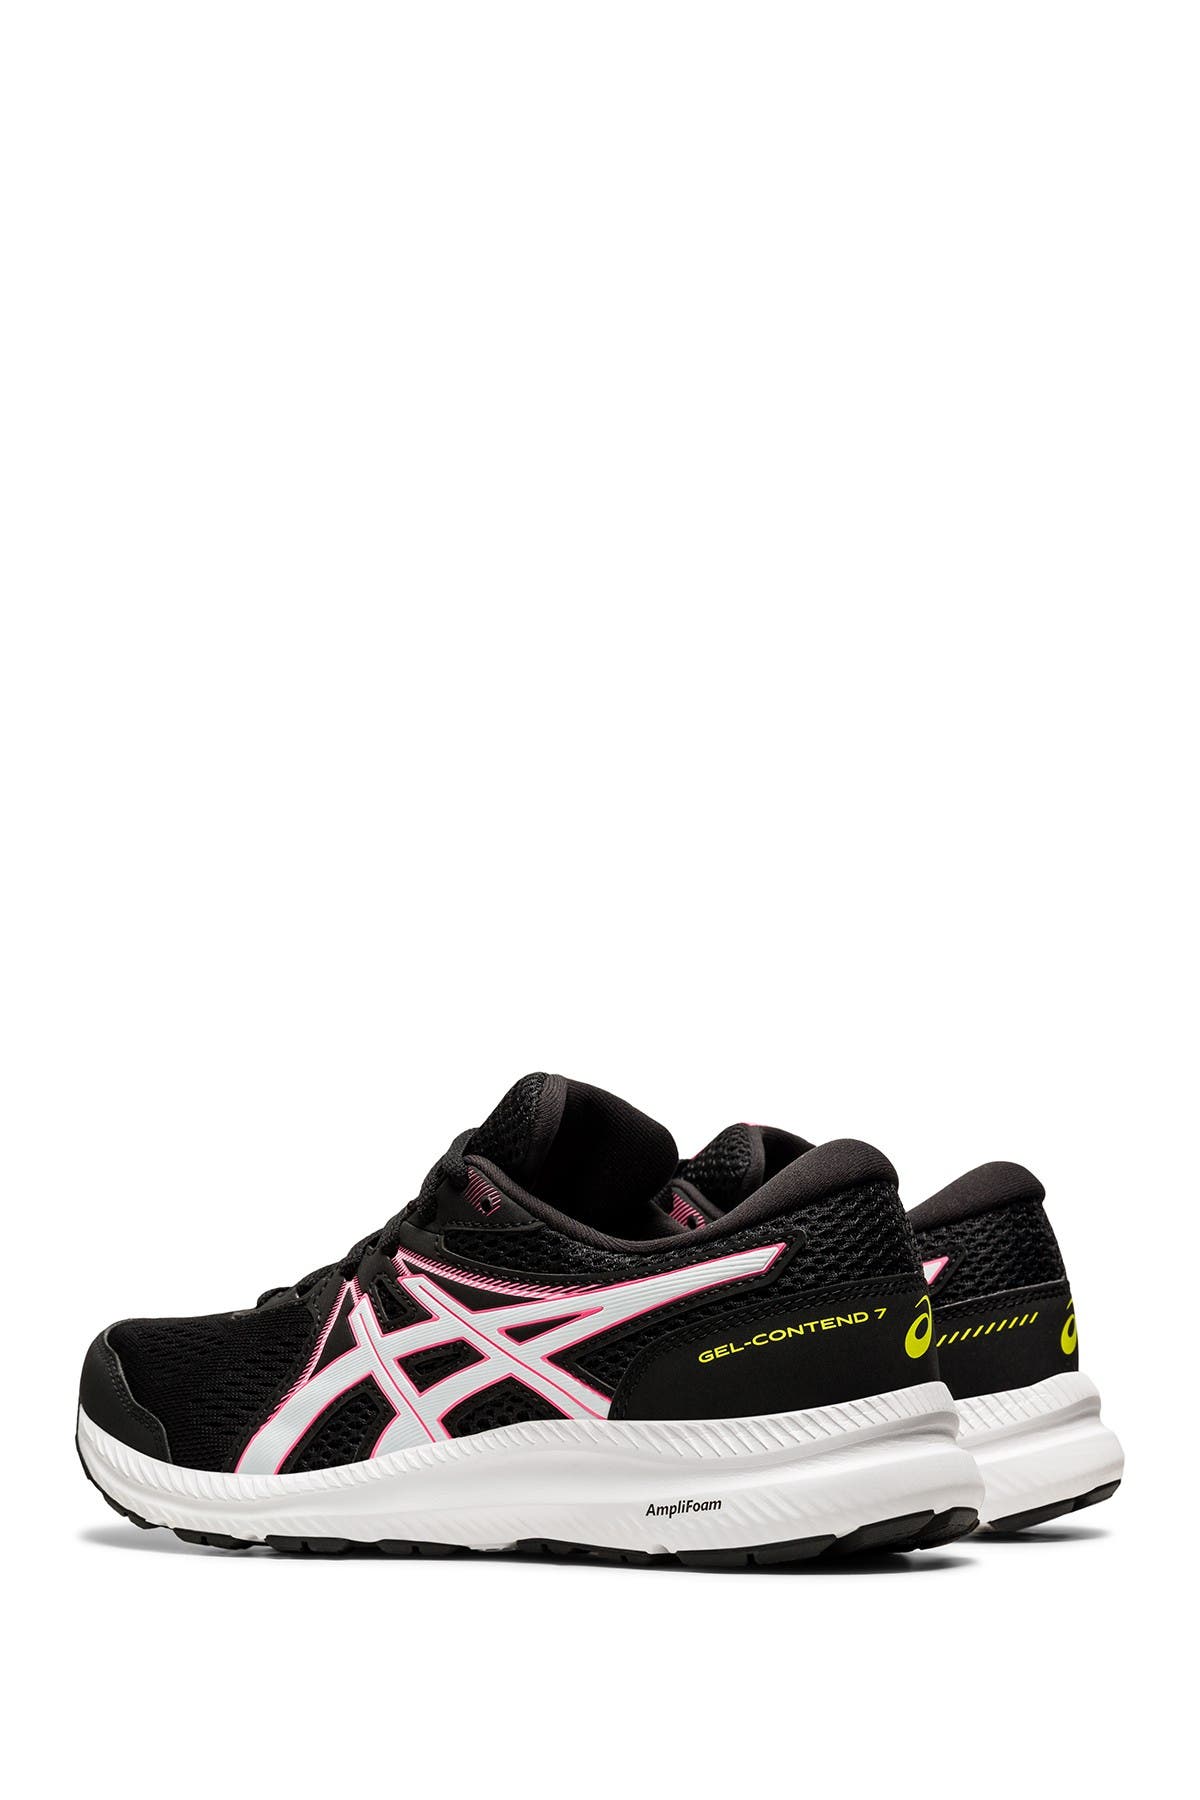 Asics Gel-contend 7 Sneaker In Black/hot Pink